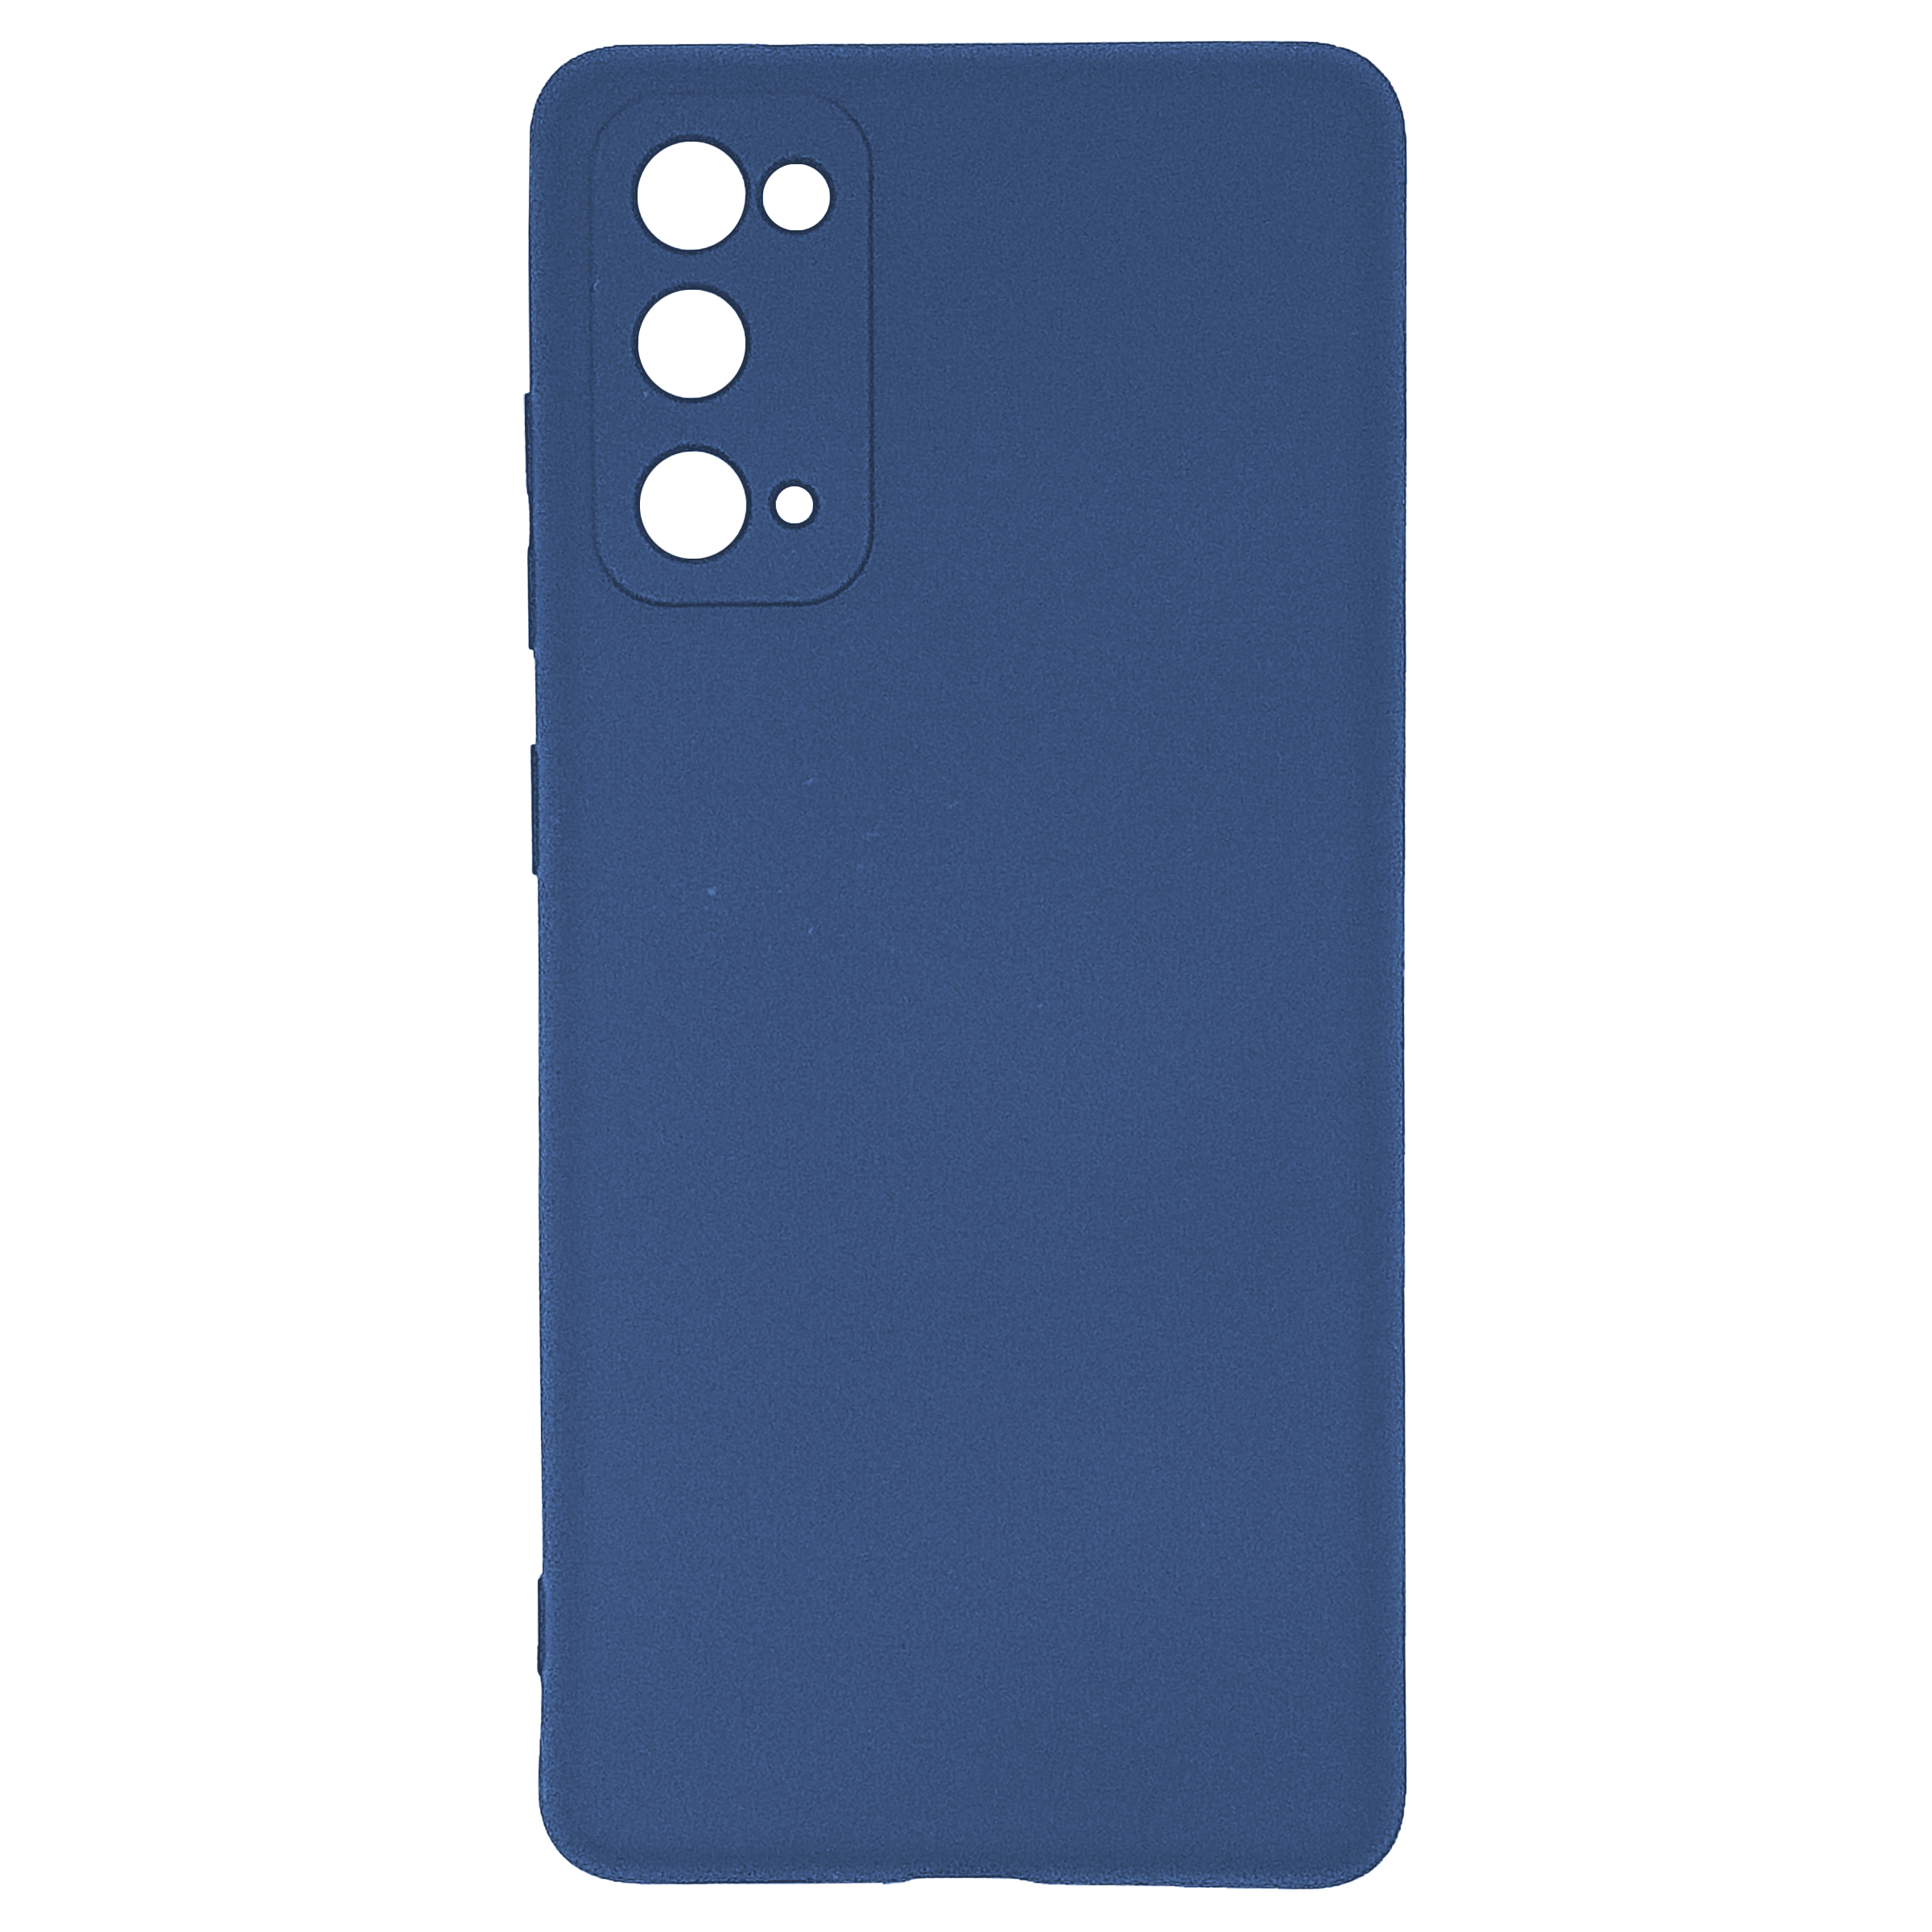 Soundrevo - Soundrevo TPU Back Case For samsung Galaxy S20 FE 5G (Anti-Slip, C020FE, Blue)